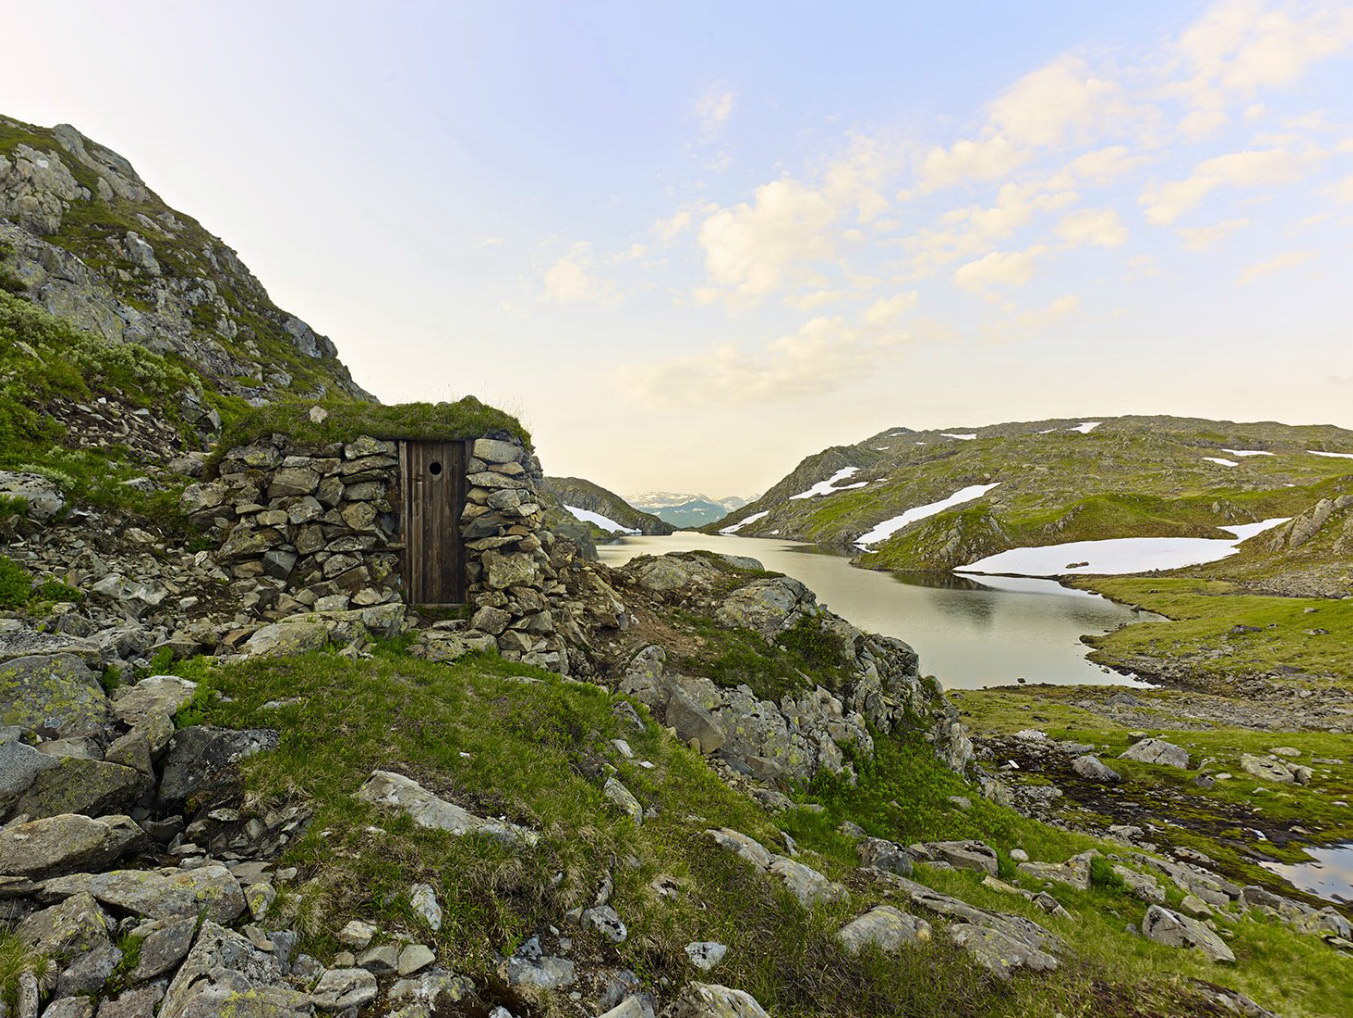 Bjellandsbu – Hunting Lodge by Snøhetta